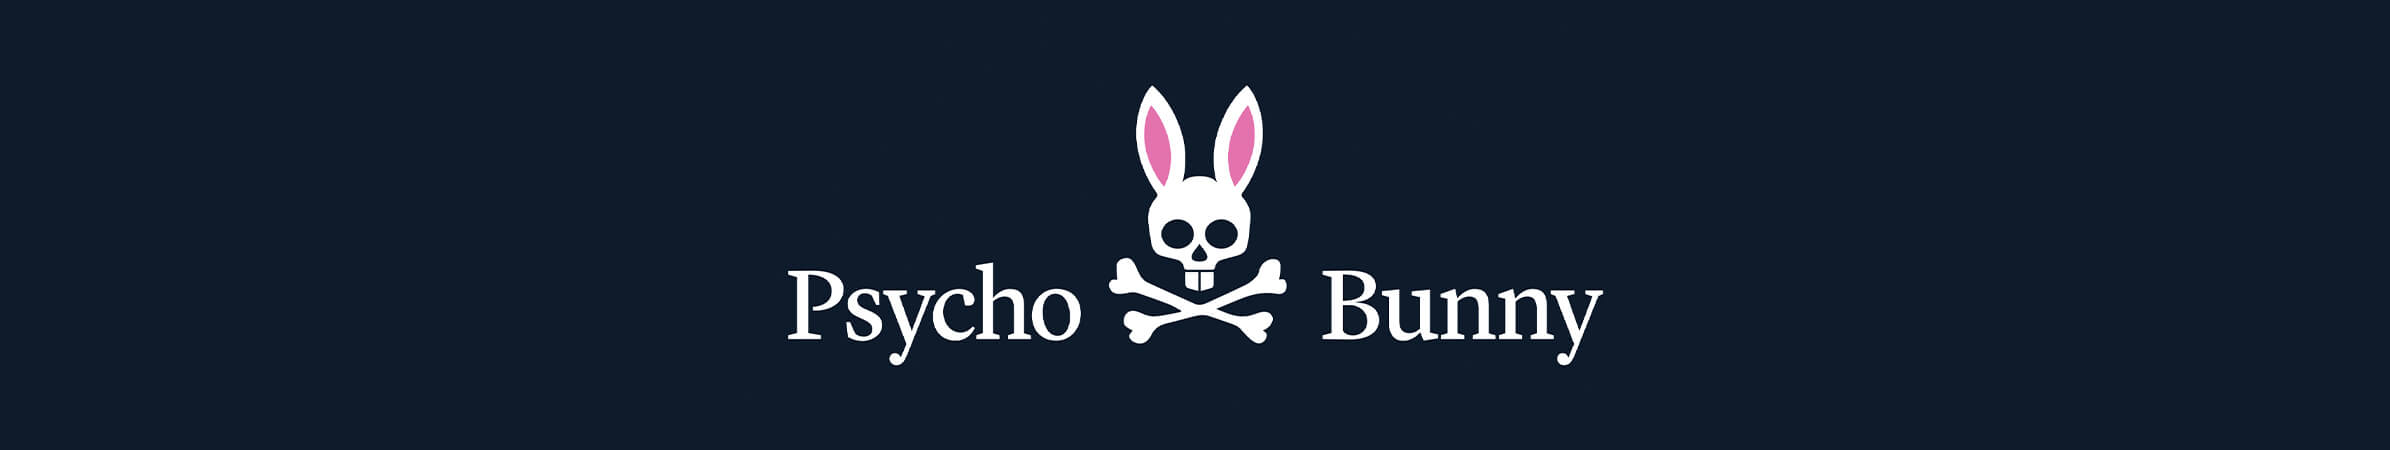 Psycho Bunny Golf